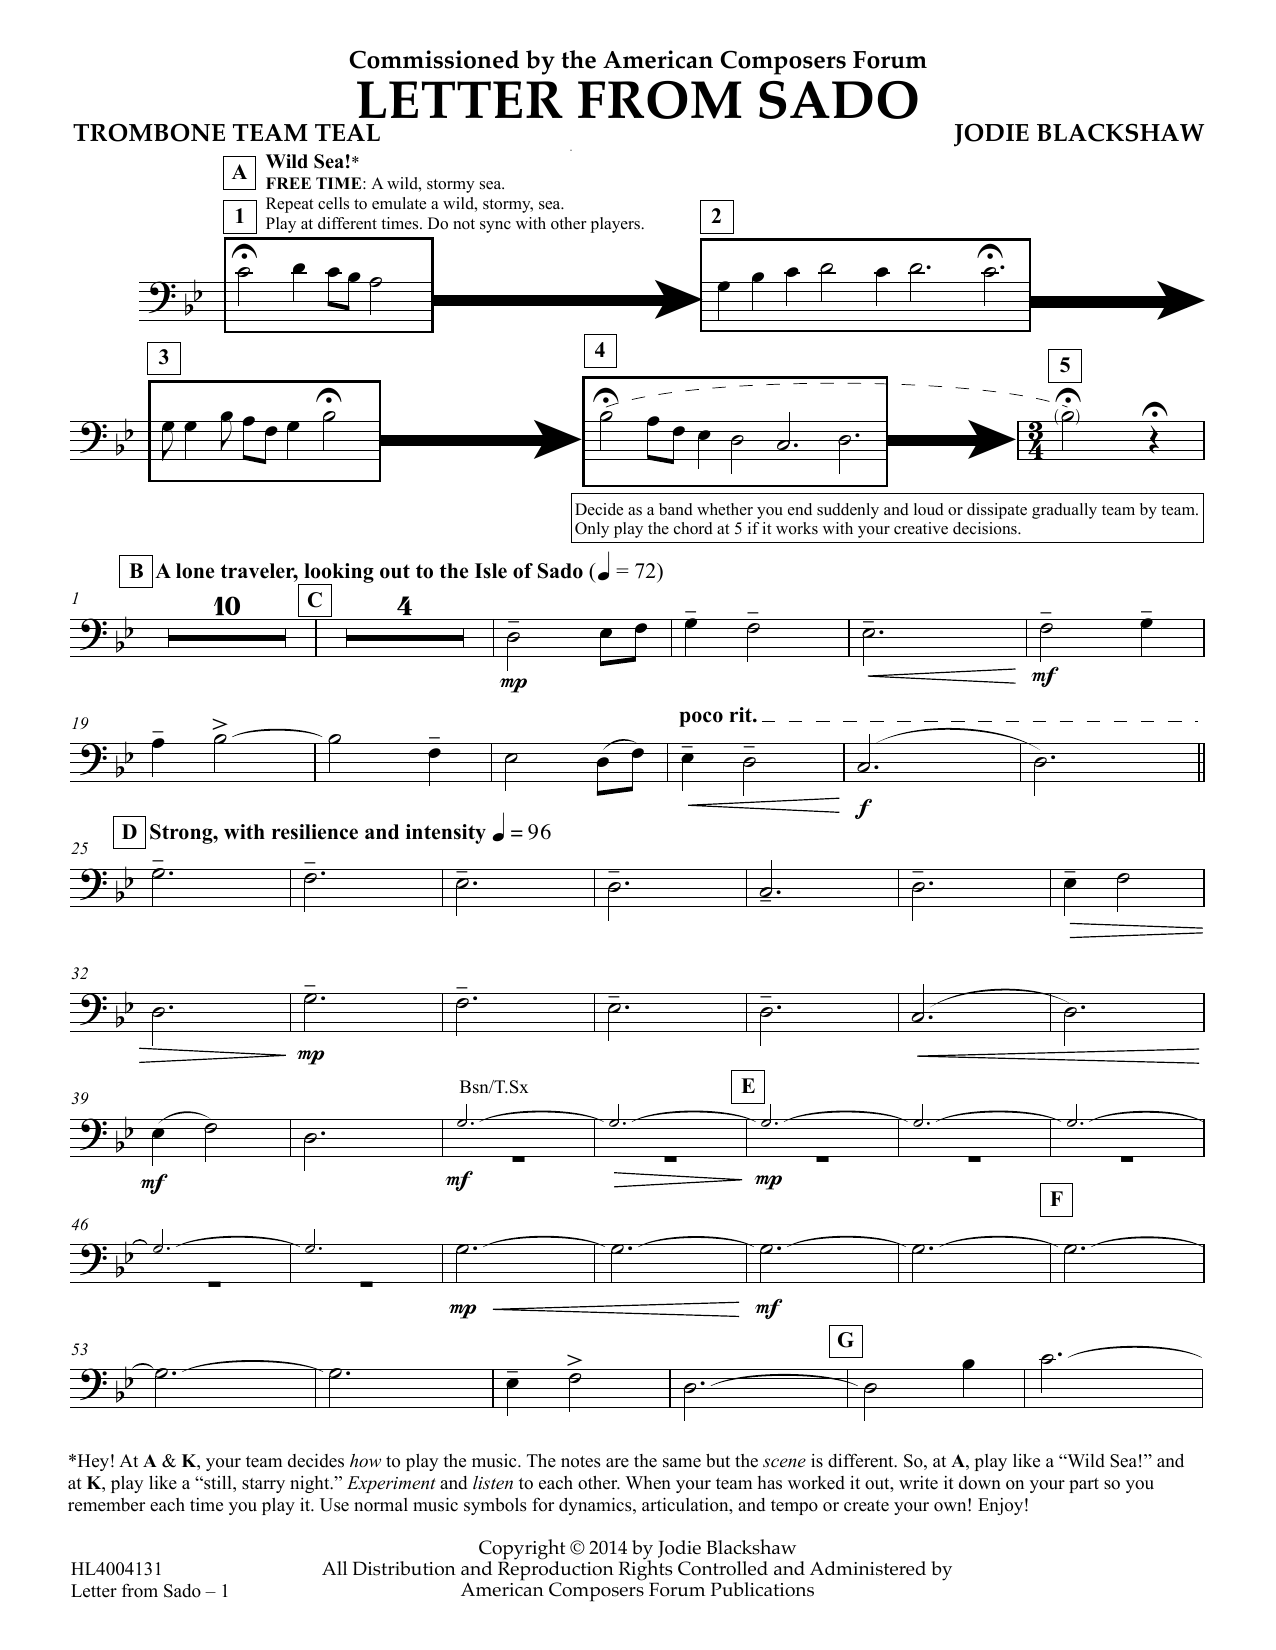 Jodie Blackshaw Letter from Sado - Trombone Team Teal Sheet Music Notes & Chords for Concert Band - Download or Print PDF